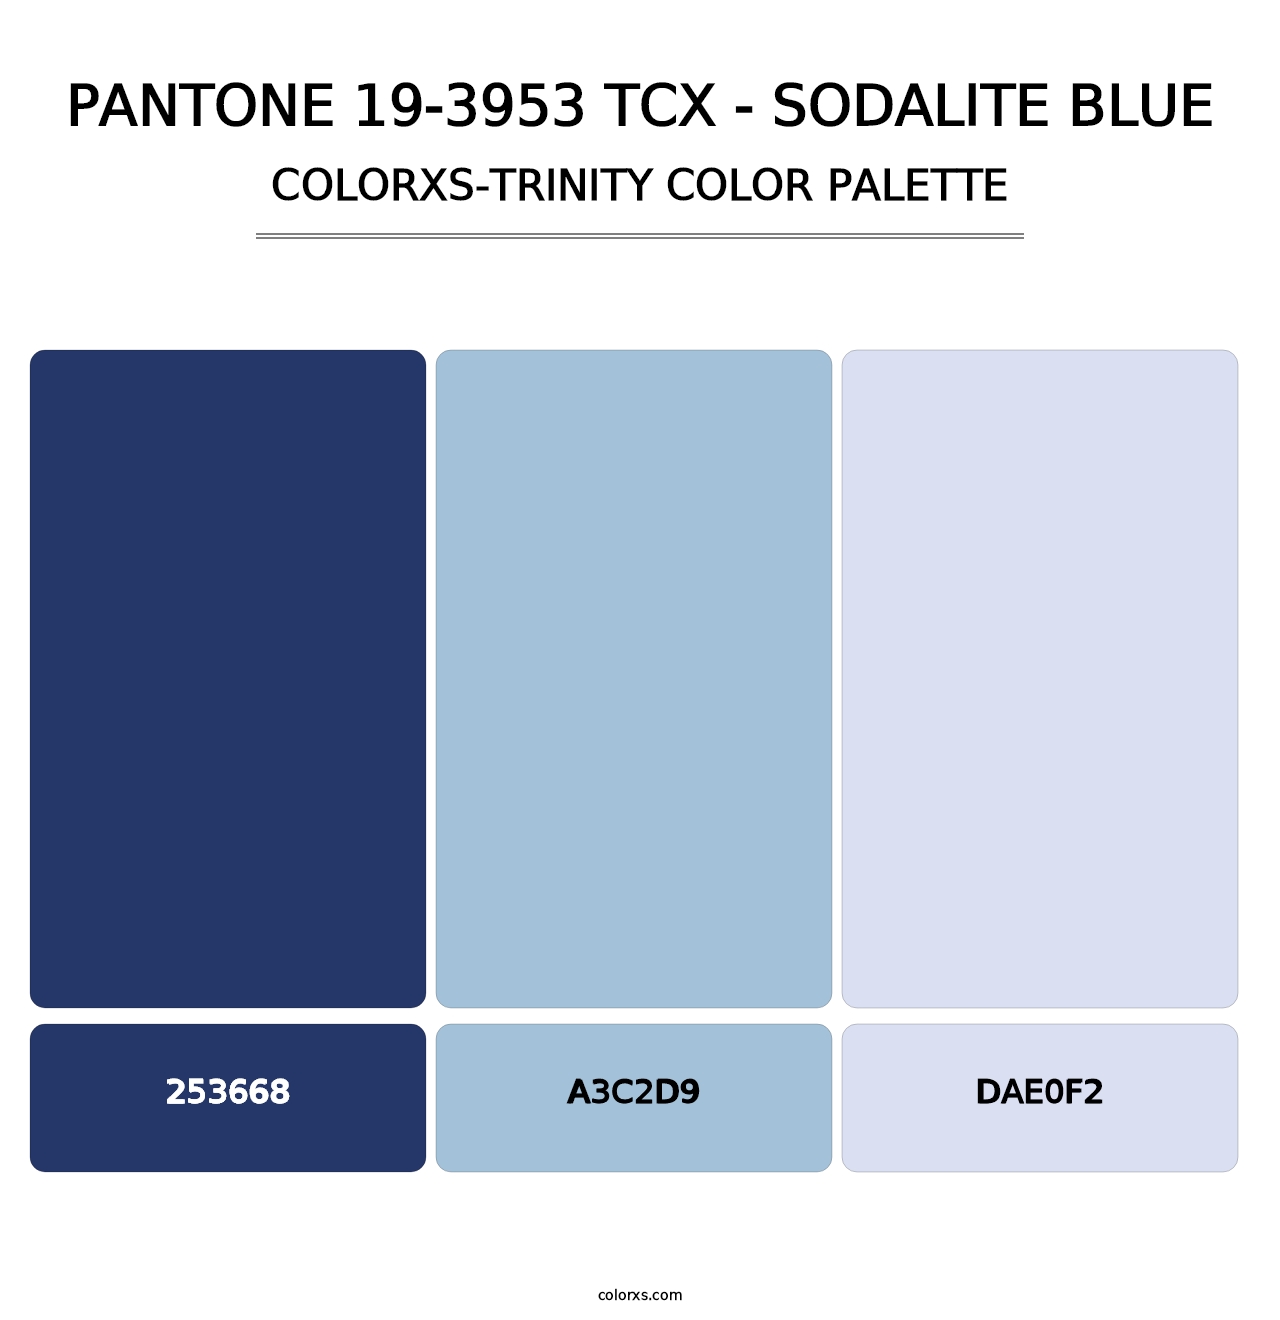 PANTONE 19-3953 TCX - Sodalite Blue - Colorxs Trinity Palette